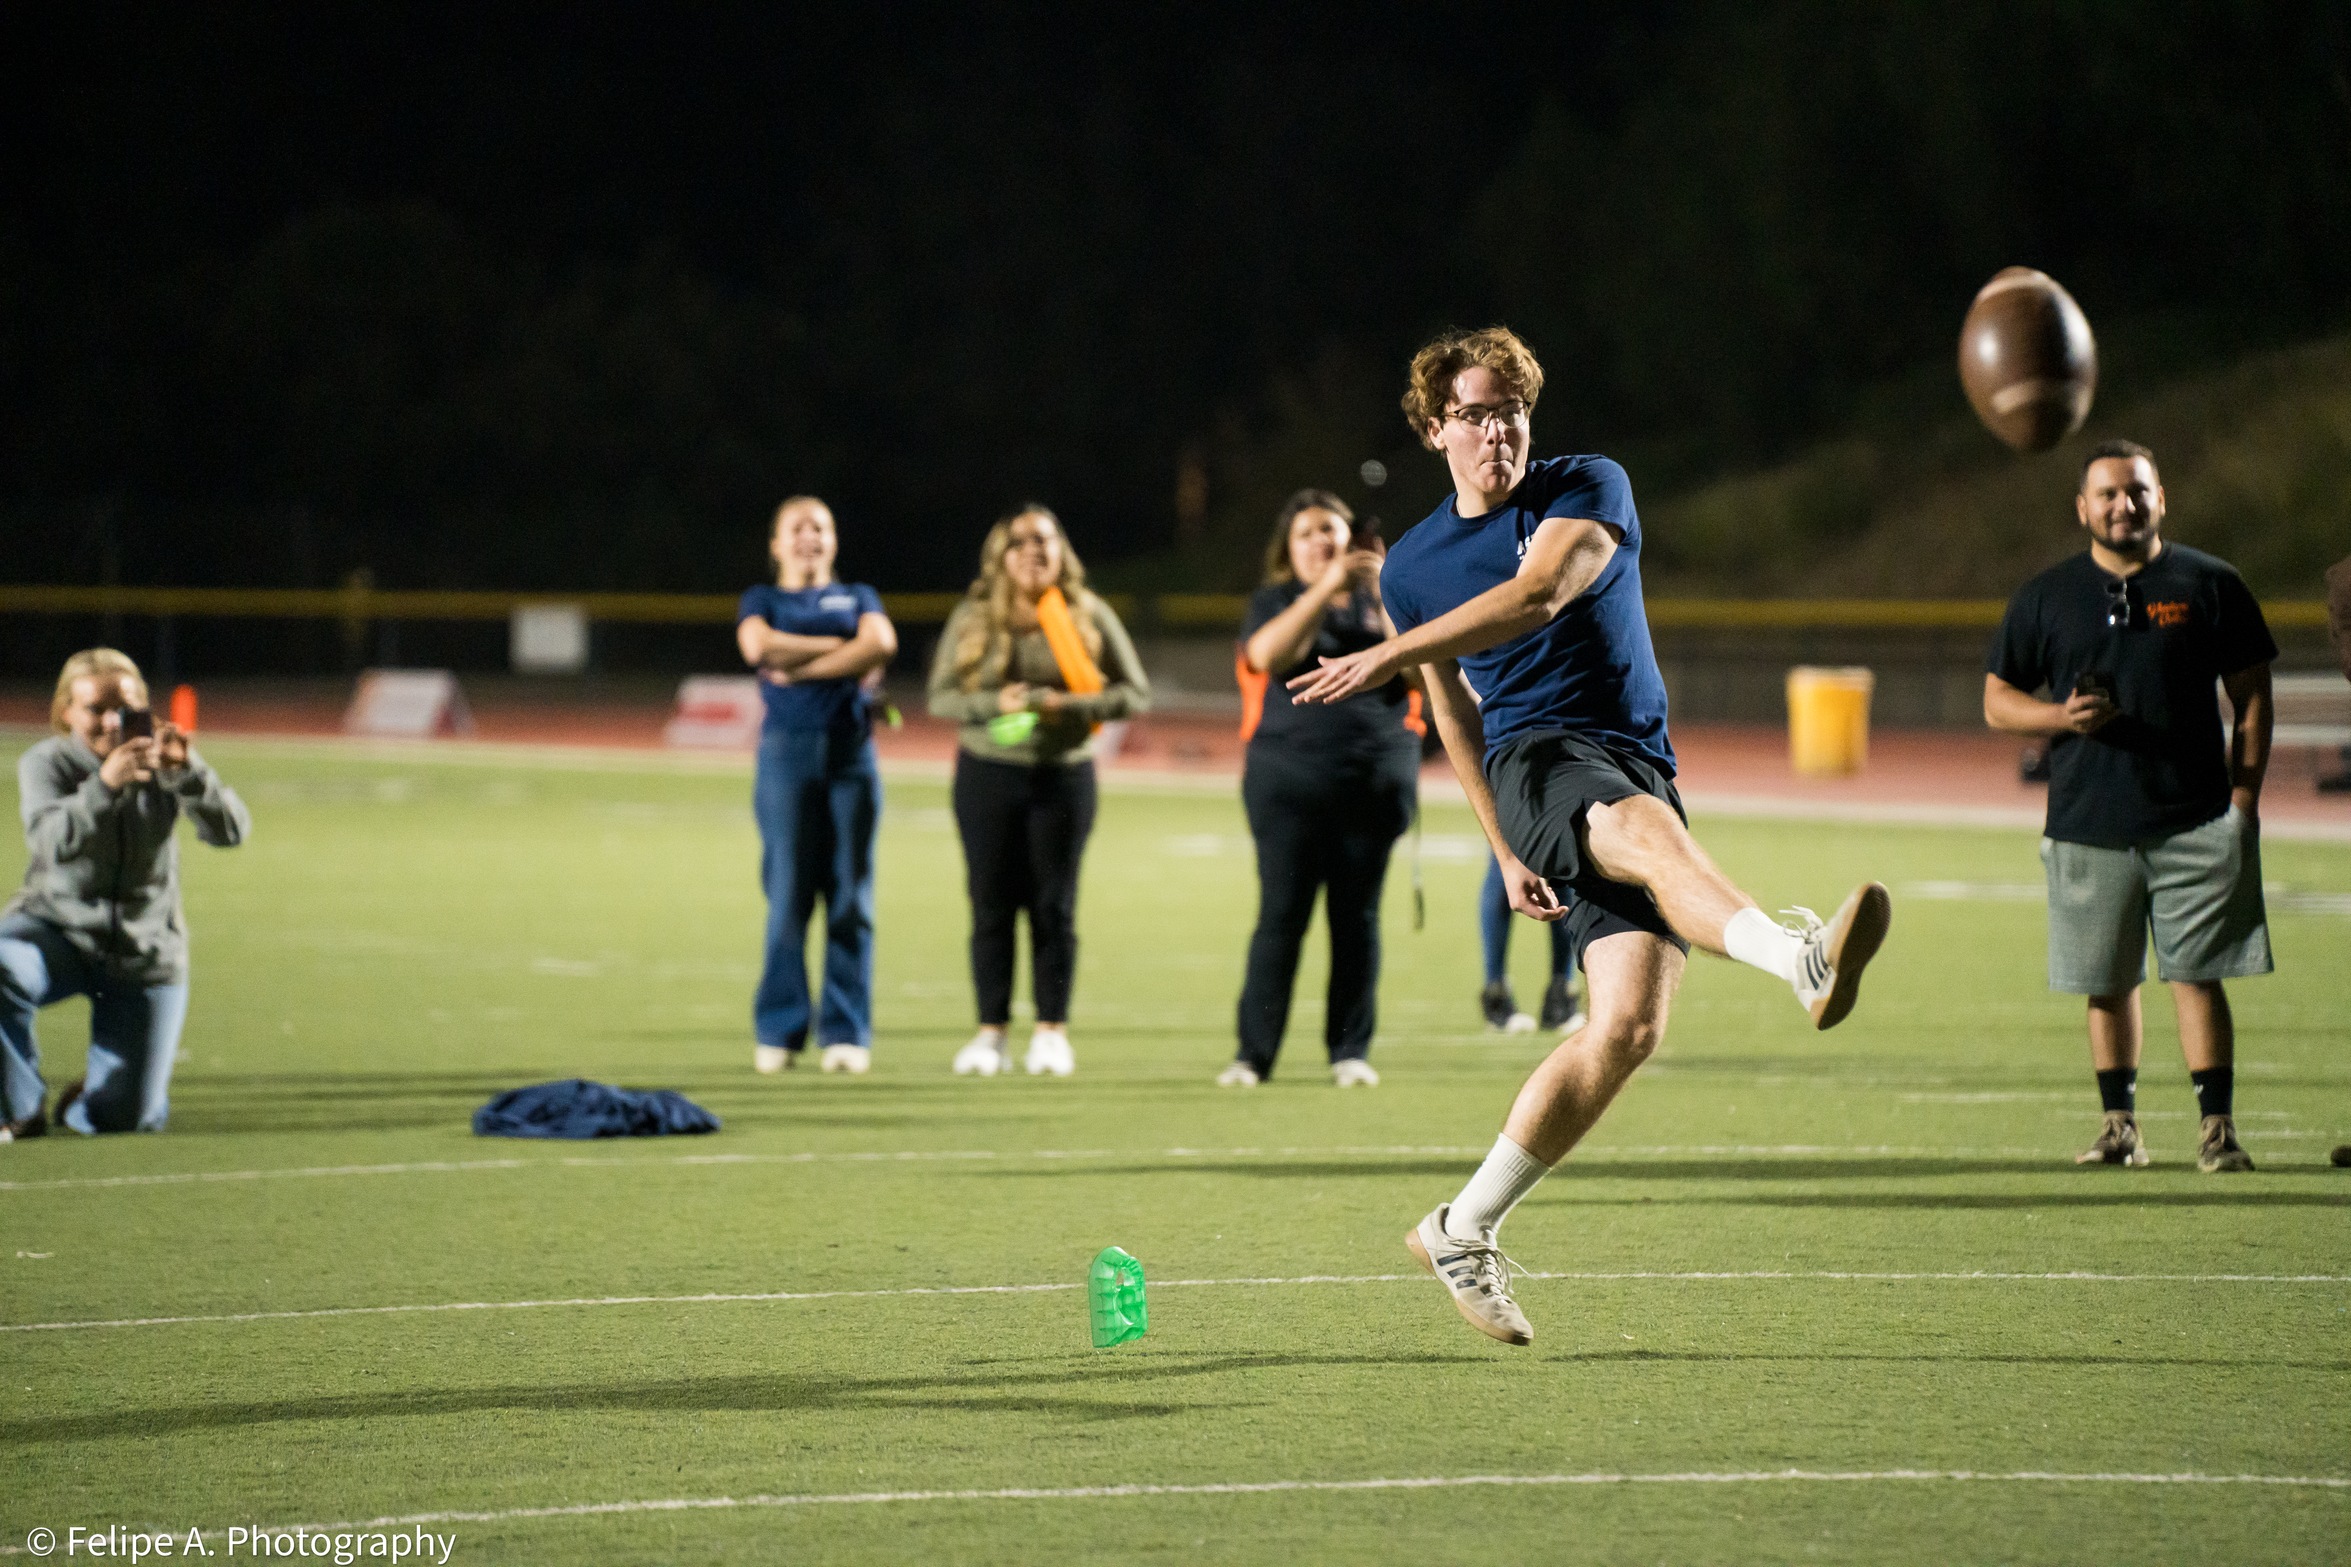 Sean Rosskopf Kicking a Field Goal